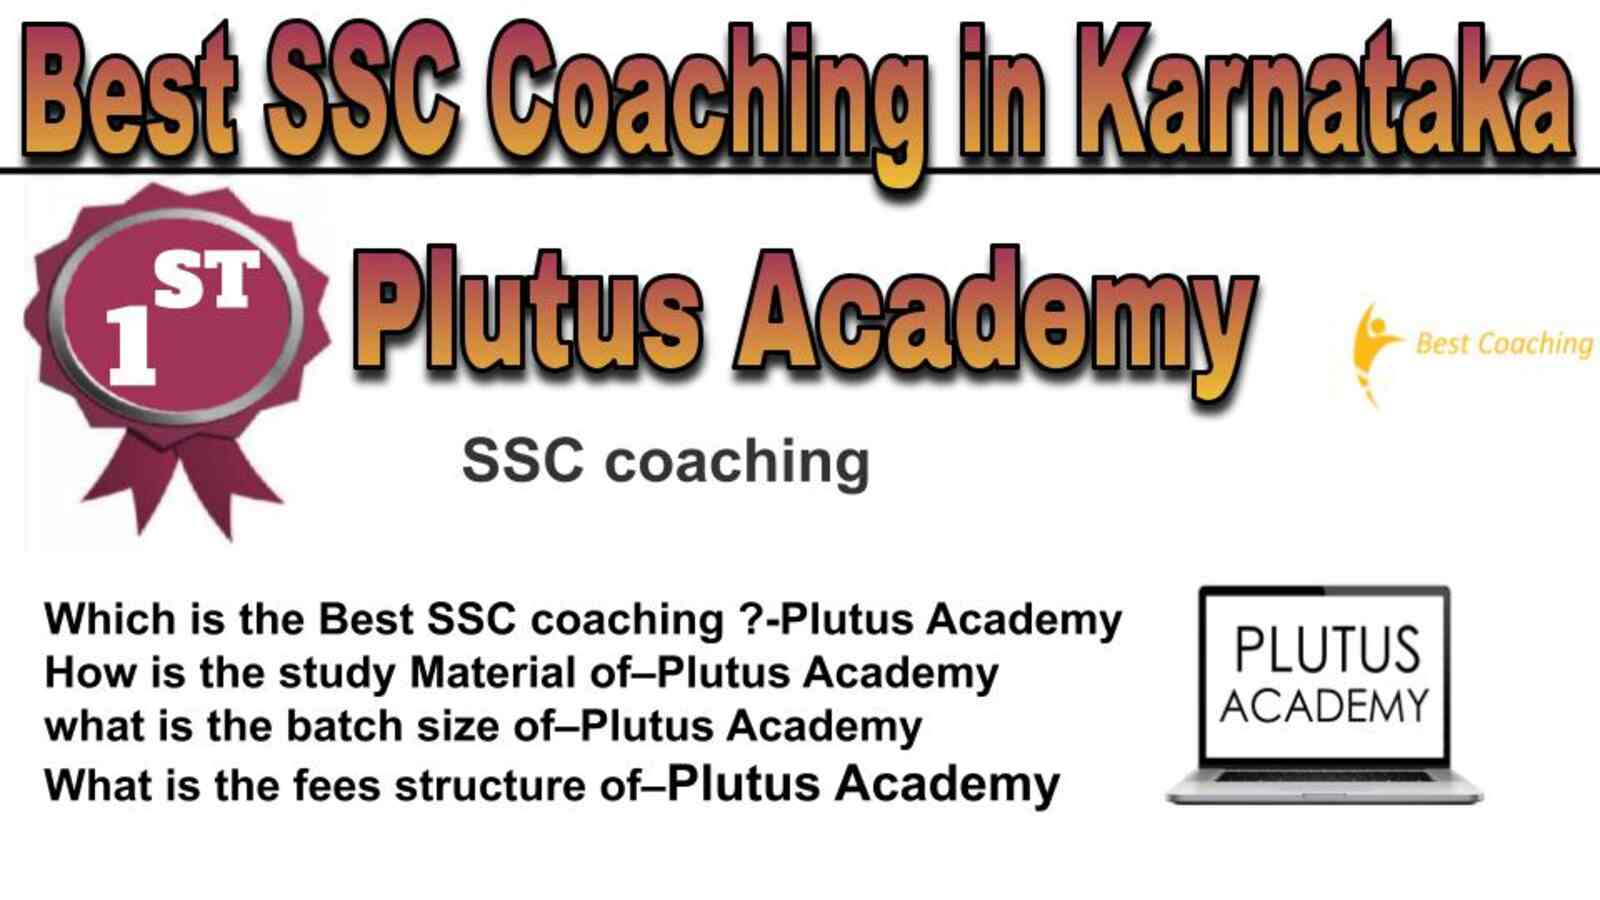 Rank 1 best SSC coaching in Karnataka